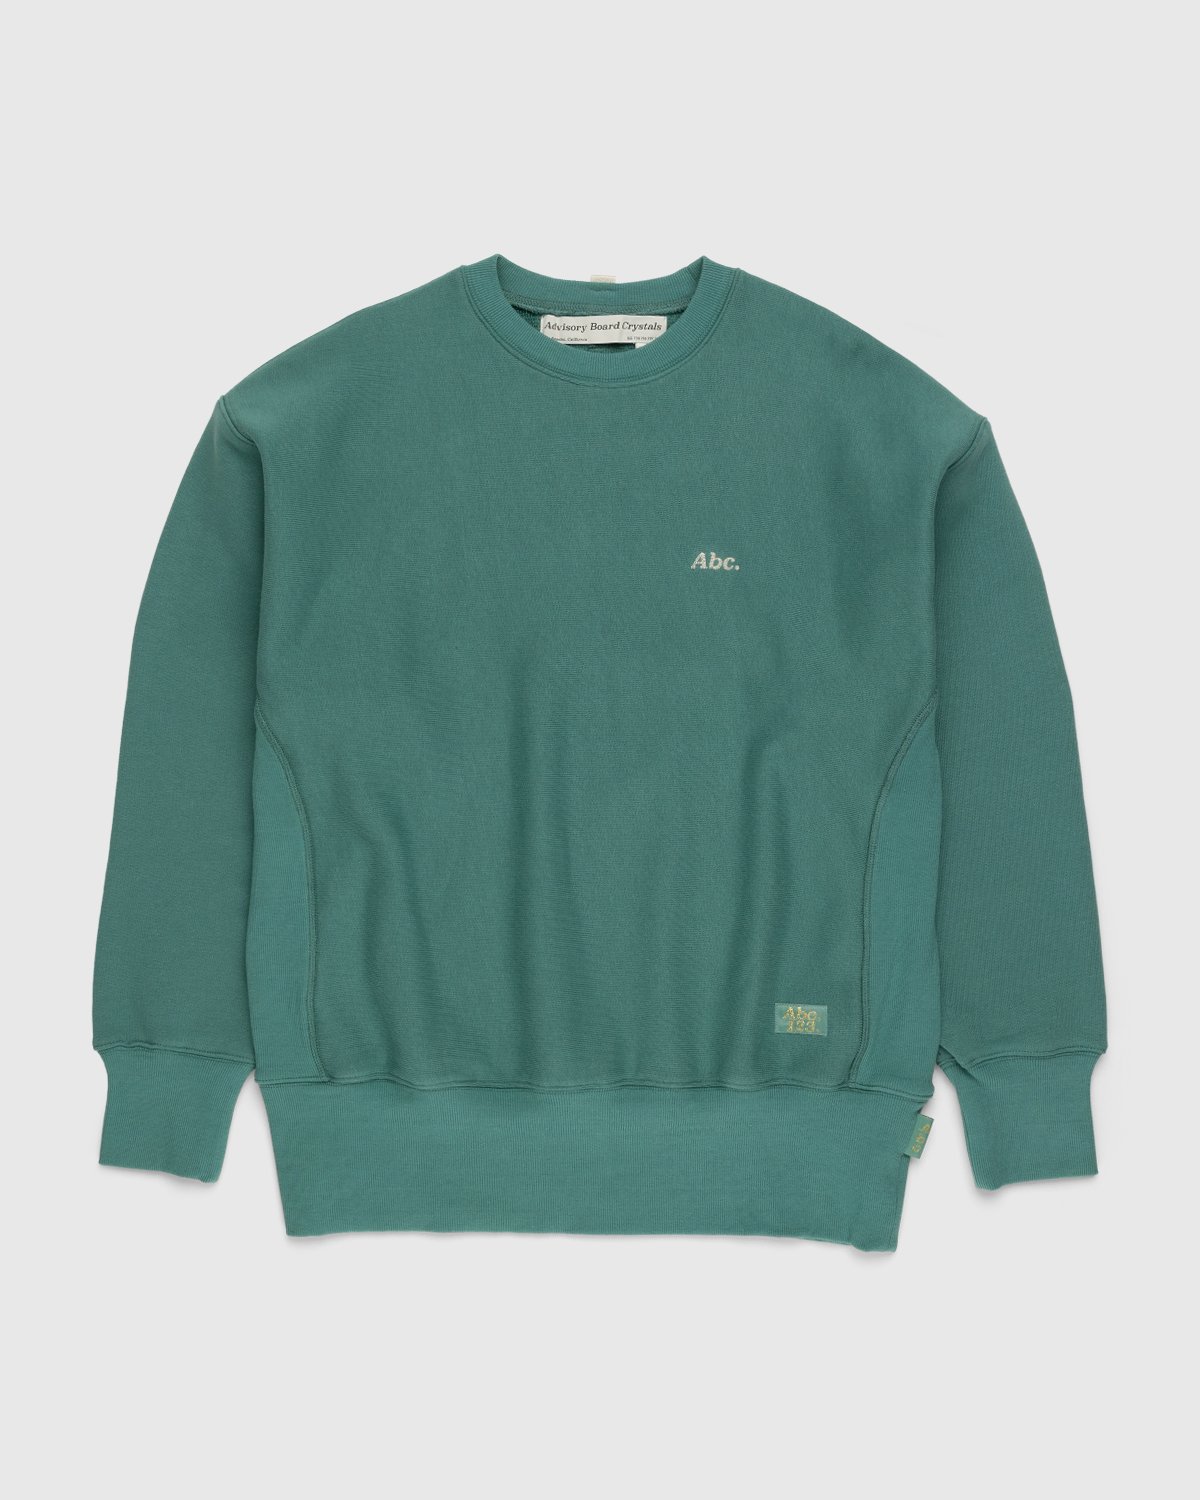 Abc. - French Terry Crewneck Sweatshirt Apatite - Clothing - Green - Image 1